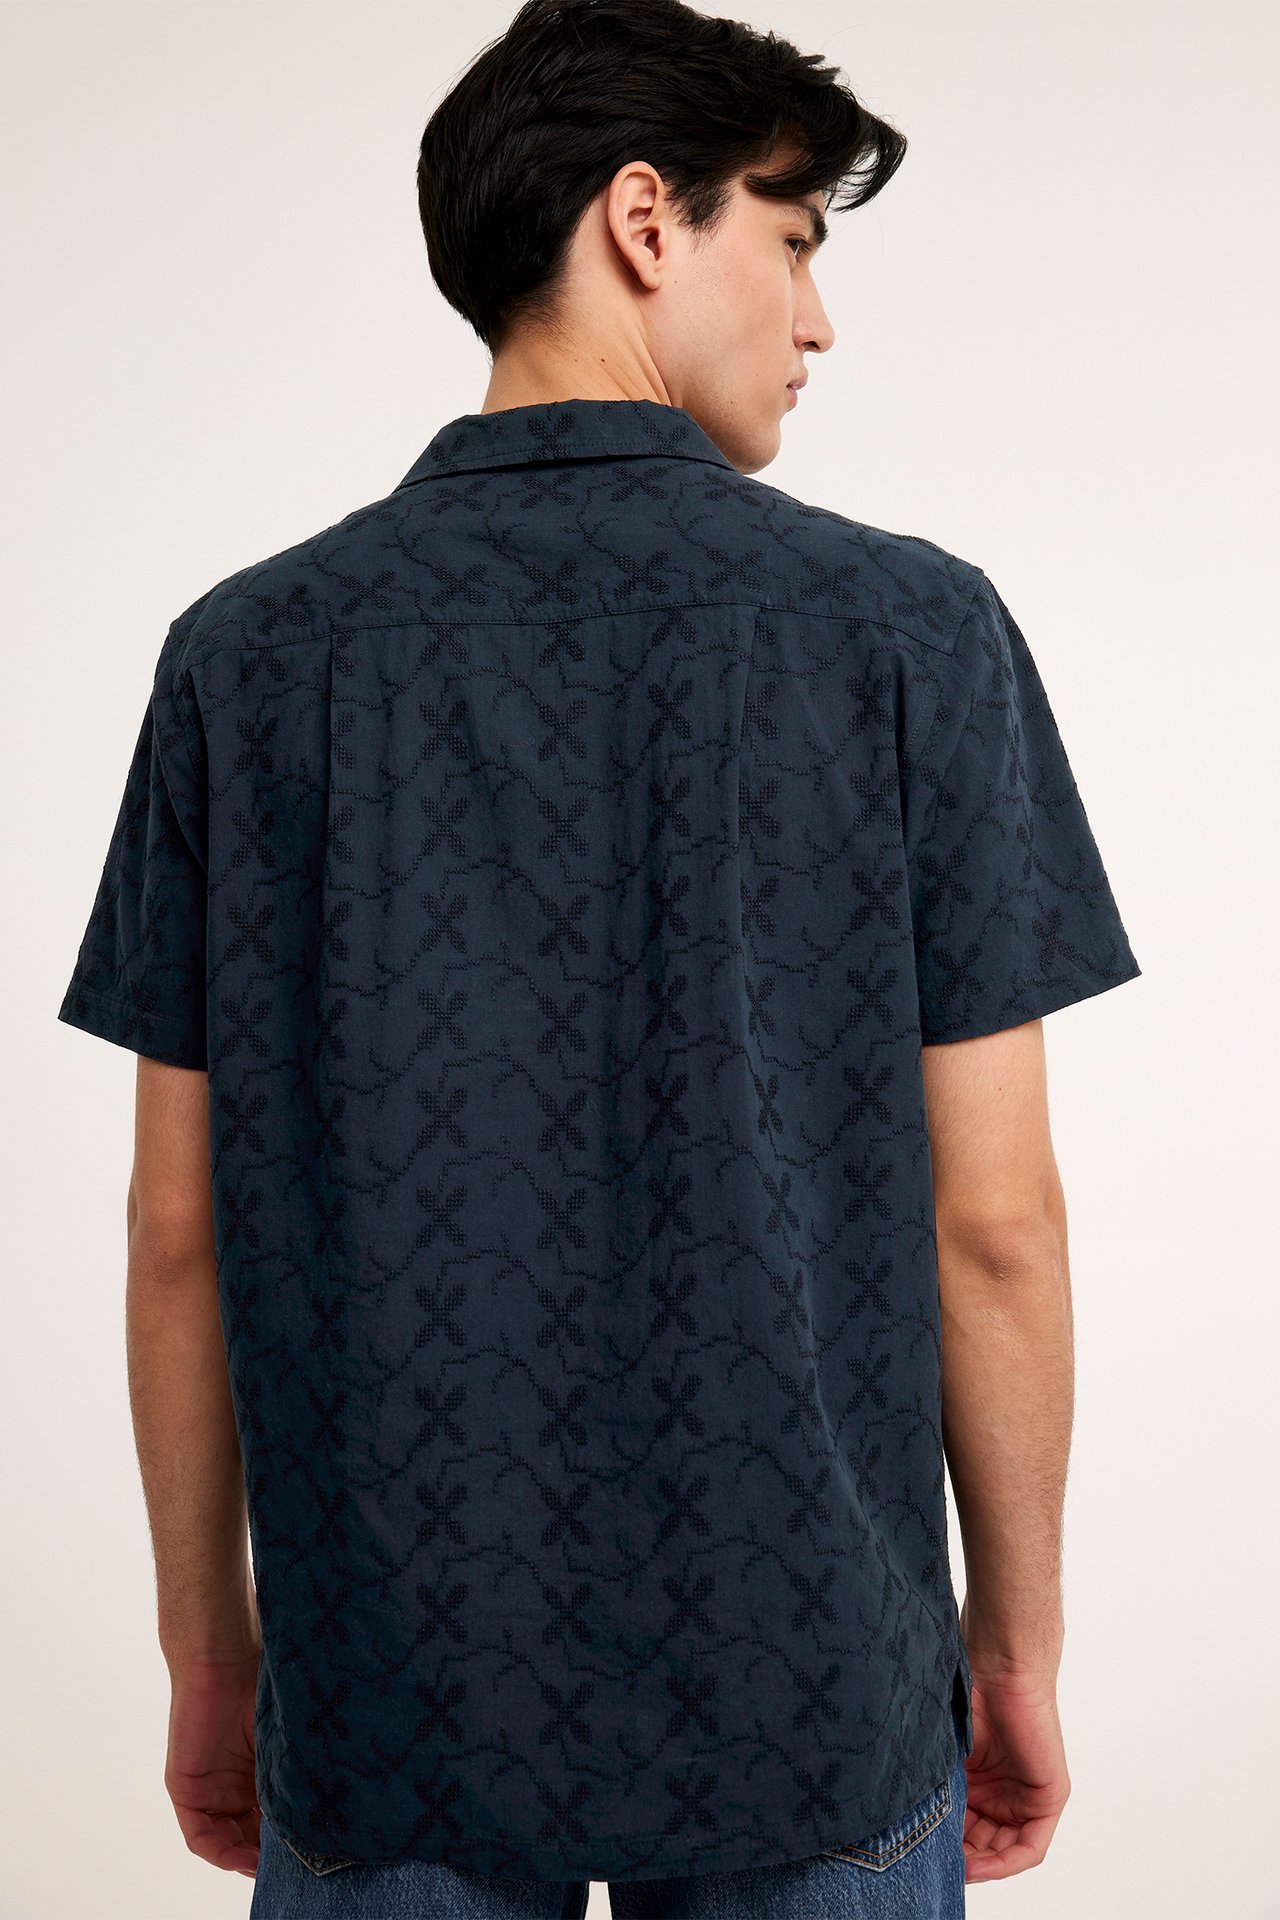 Resortskjorte med brodering - Mørkeblå - 189cm / Storlek: M - 3